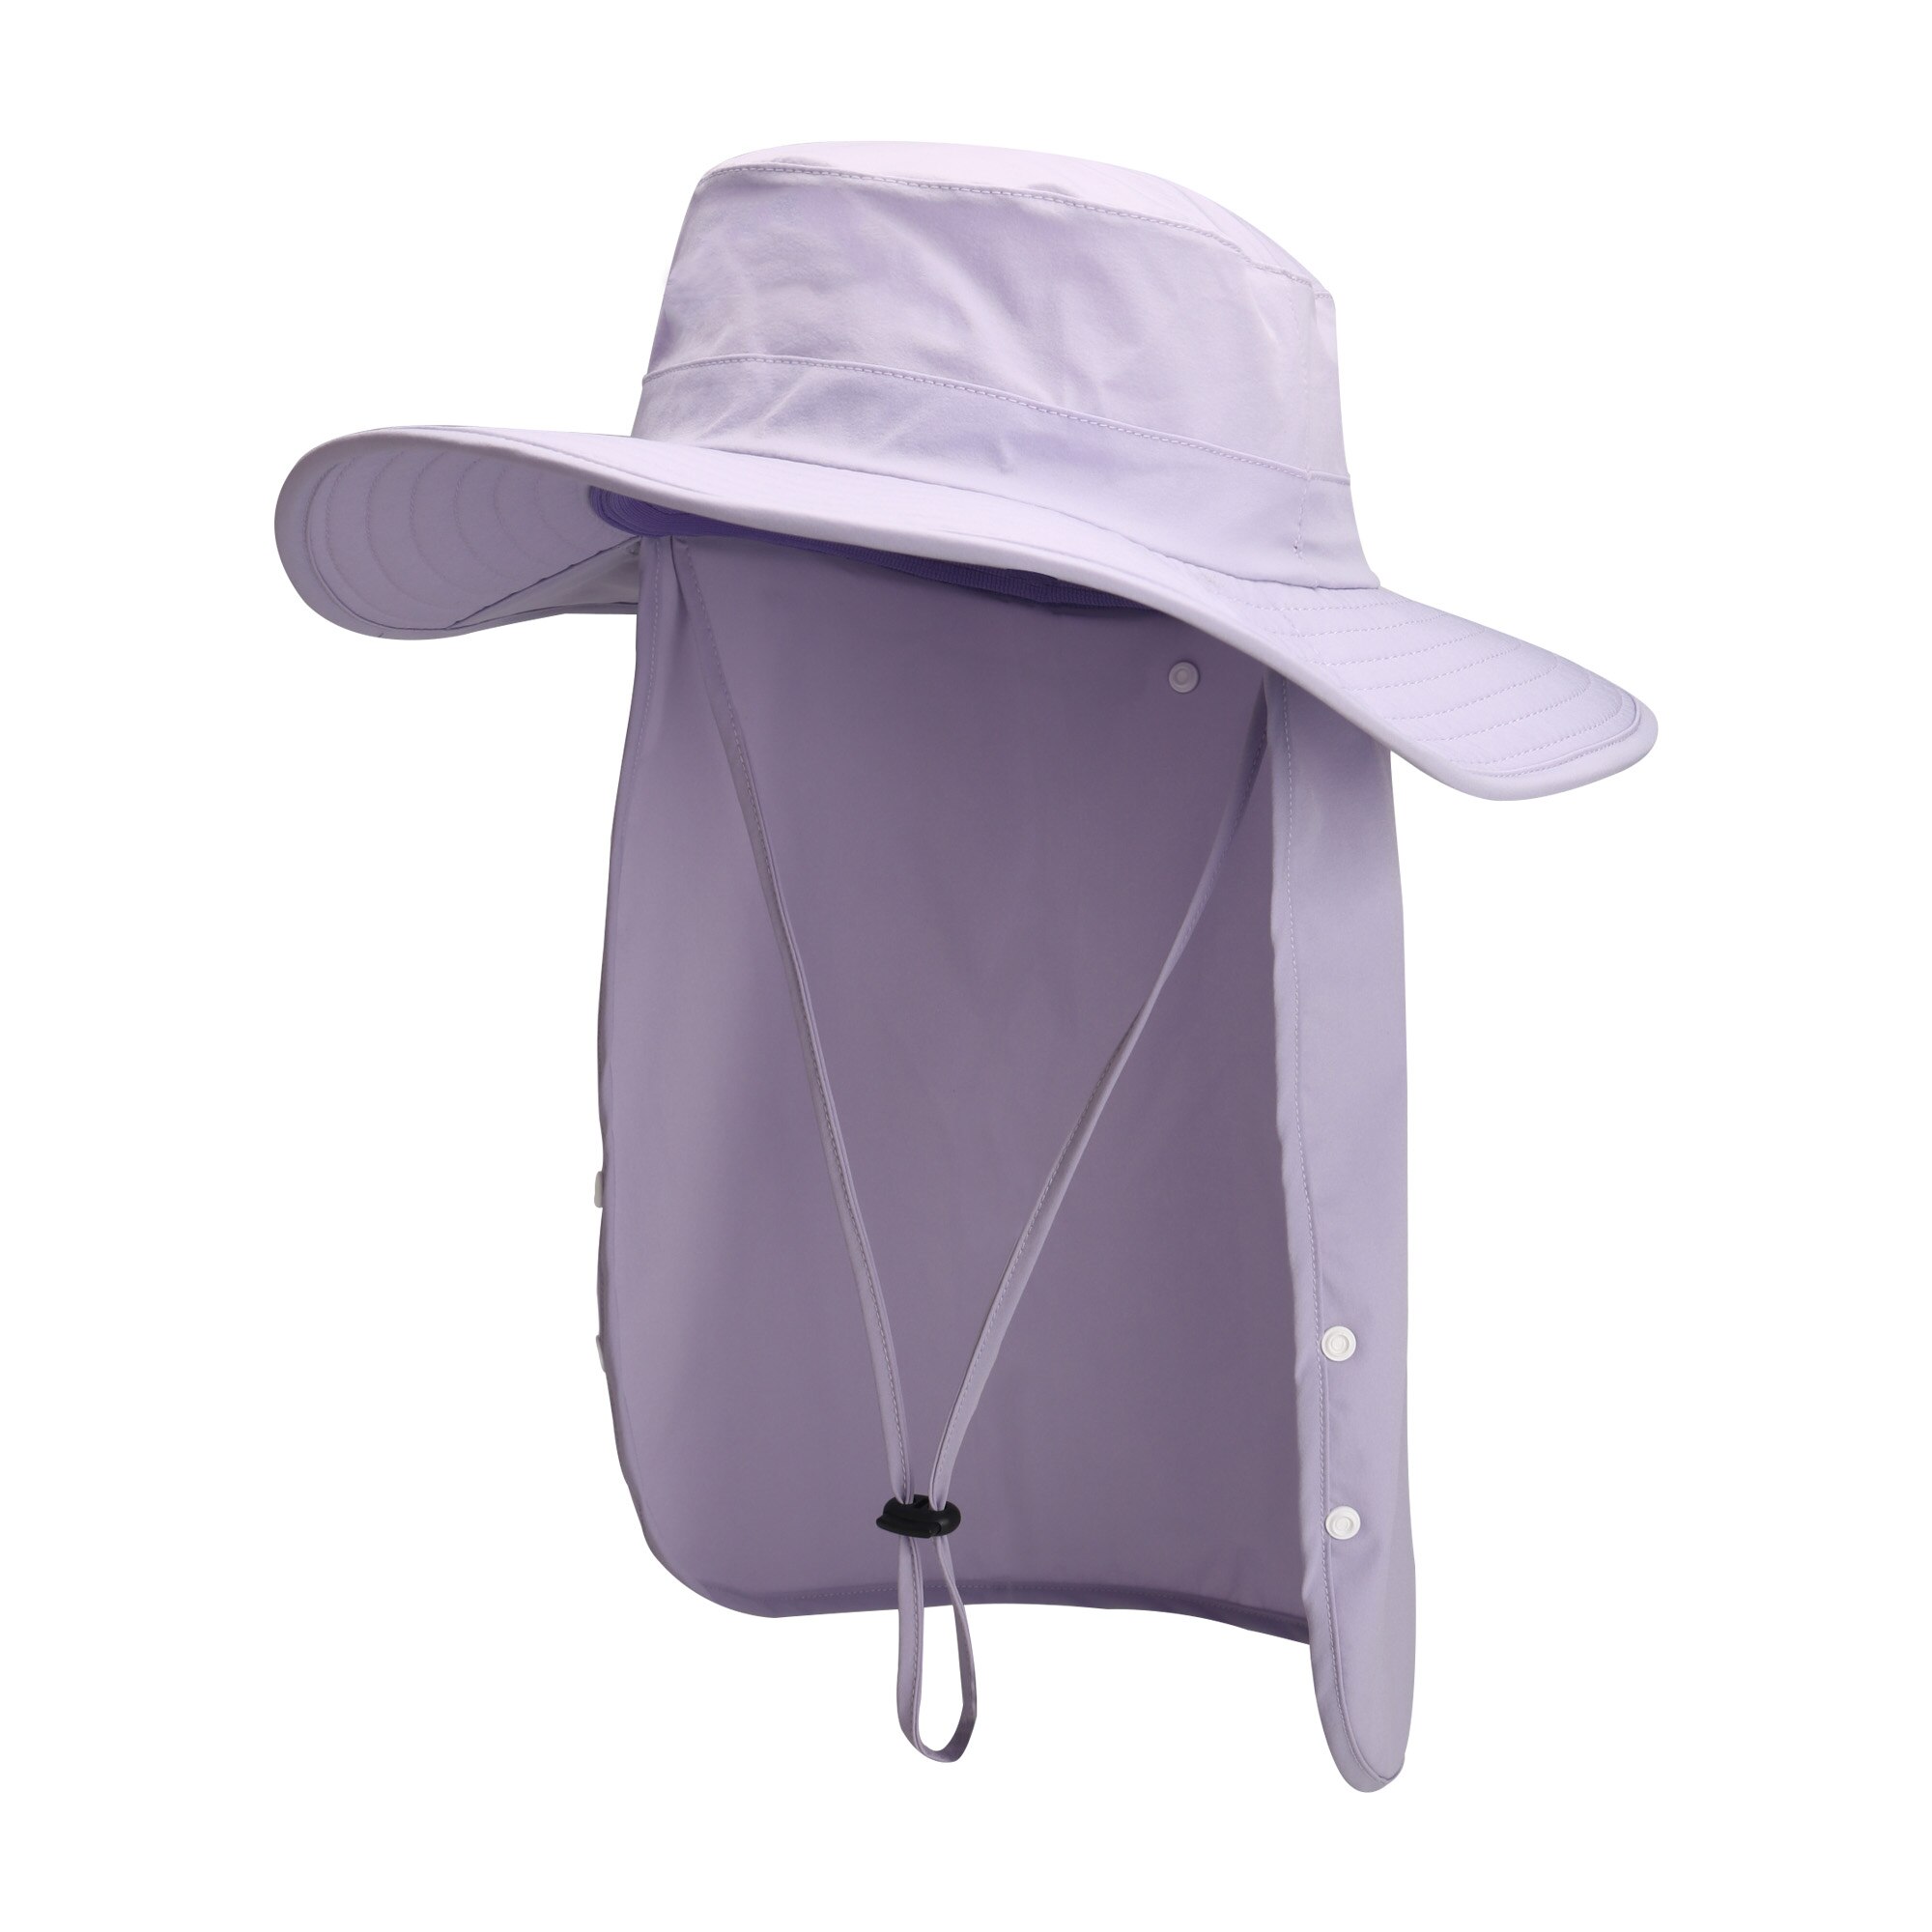 Connectyle Mens Vrouwen Upf 50 + Zon Bescherming Safari Hoed Lichtgewicht Quick Dry Verstelbare Opvouwbare Met Nek Flap Vissen Zon hoed: Light Purple